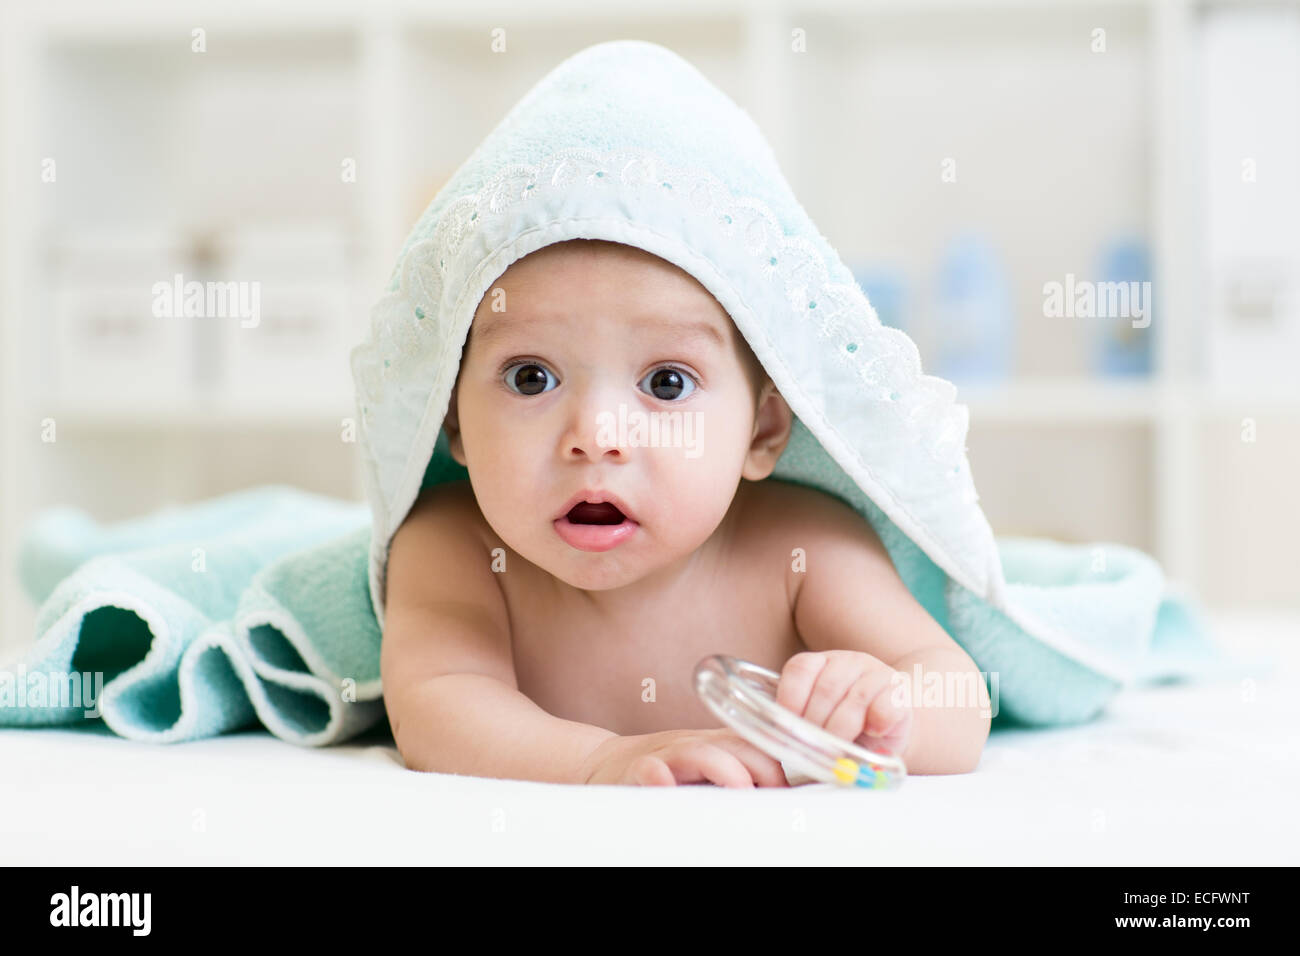 Adorable happy baby in towel Stock Photo